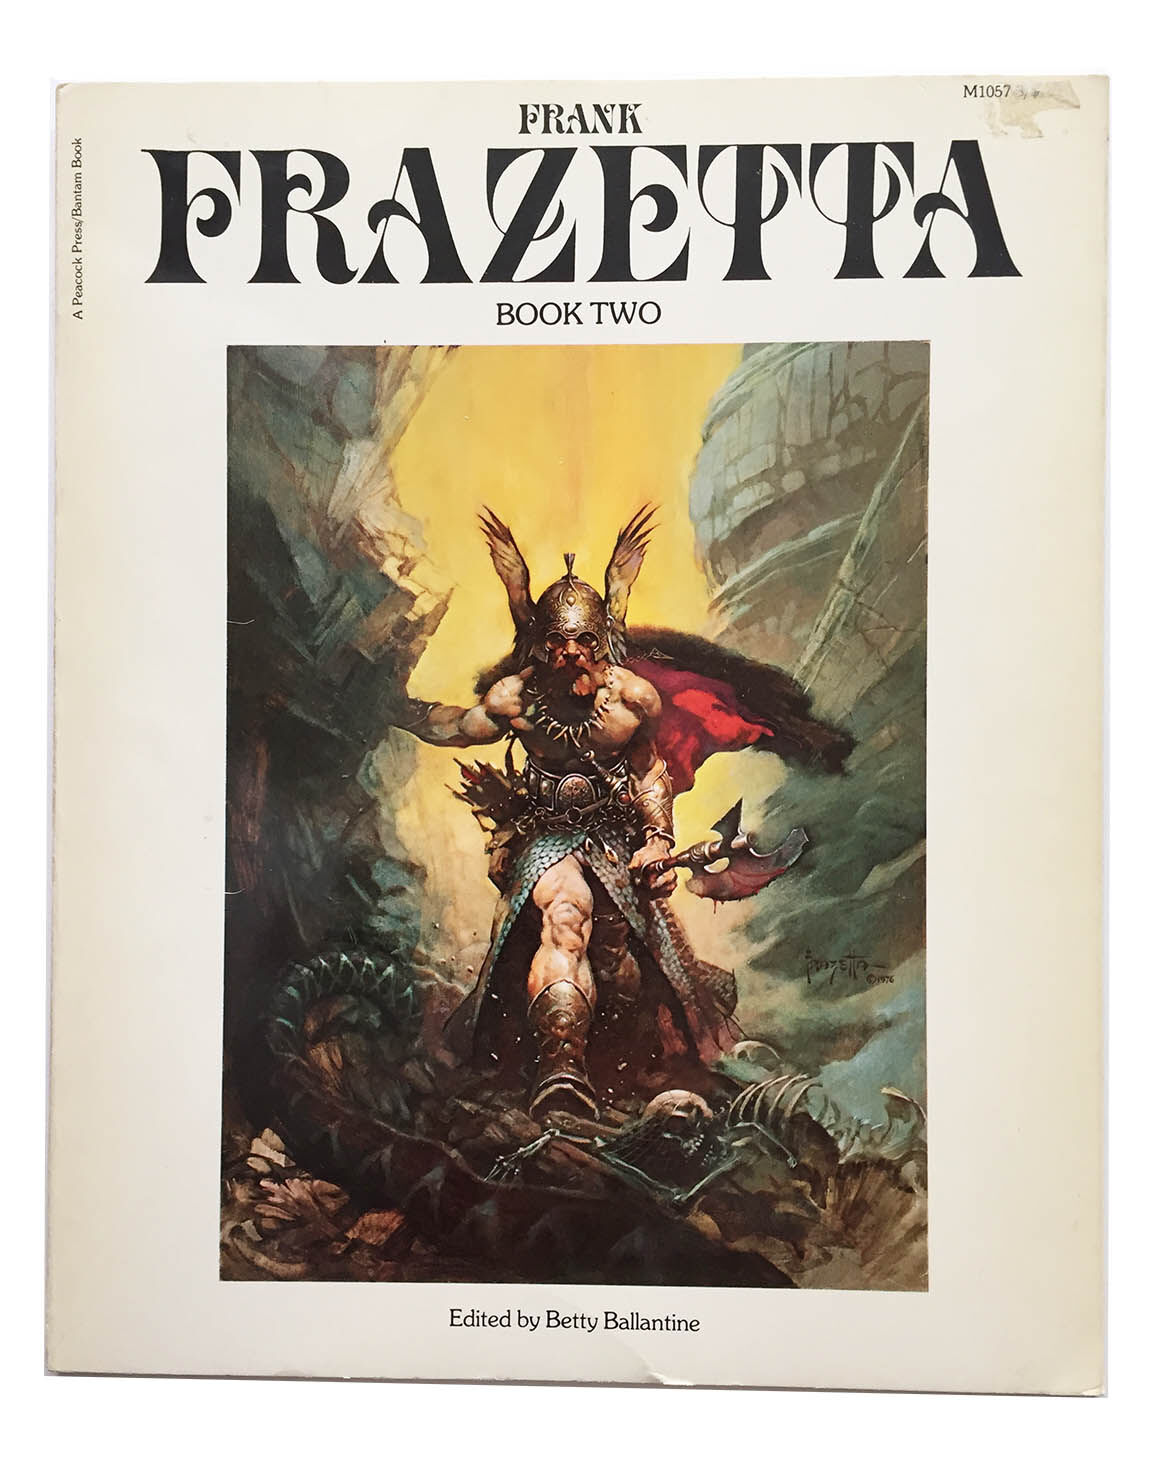 Frazetta Book Two